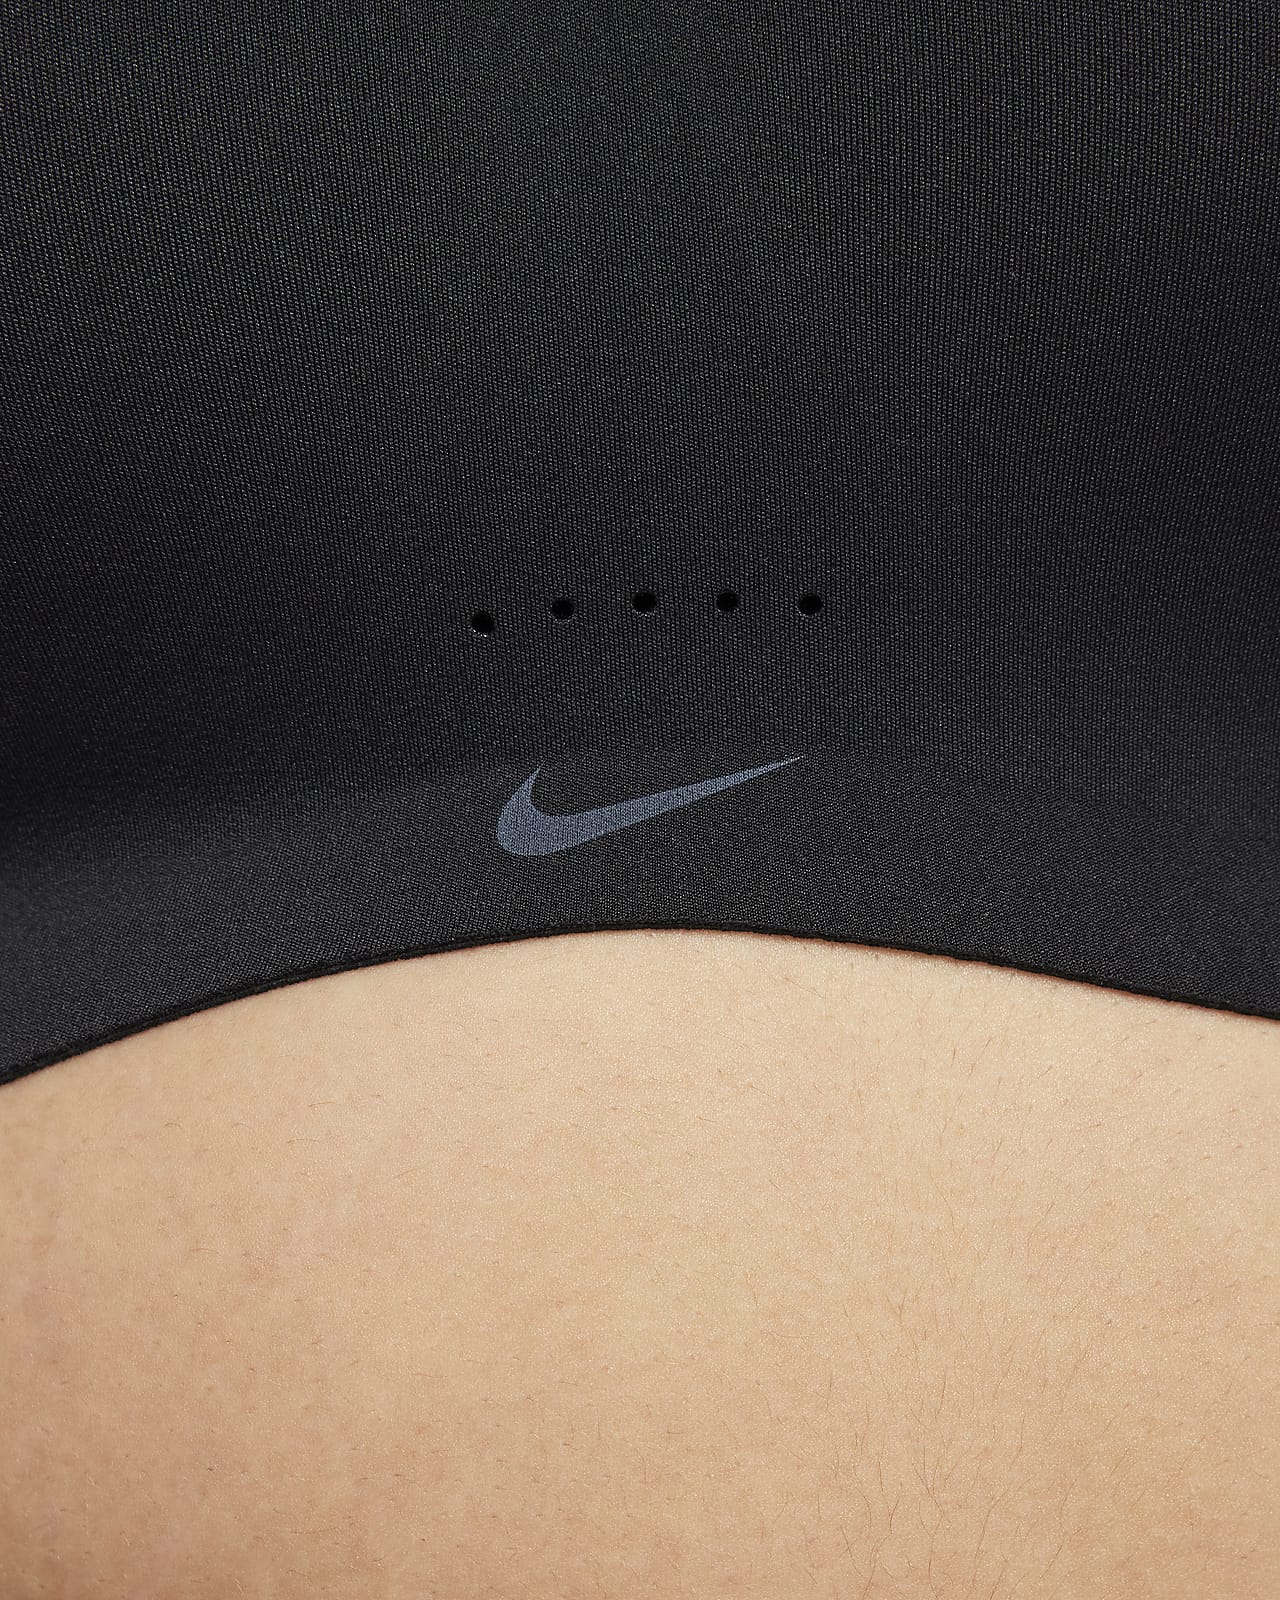 Women's Nike Alate Minimalist Sports Bra Size XS (A-C) Desert Dust